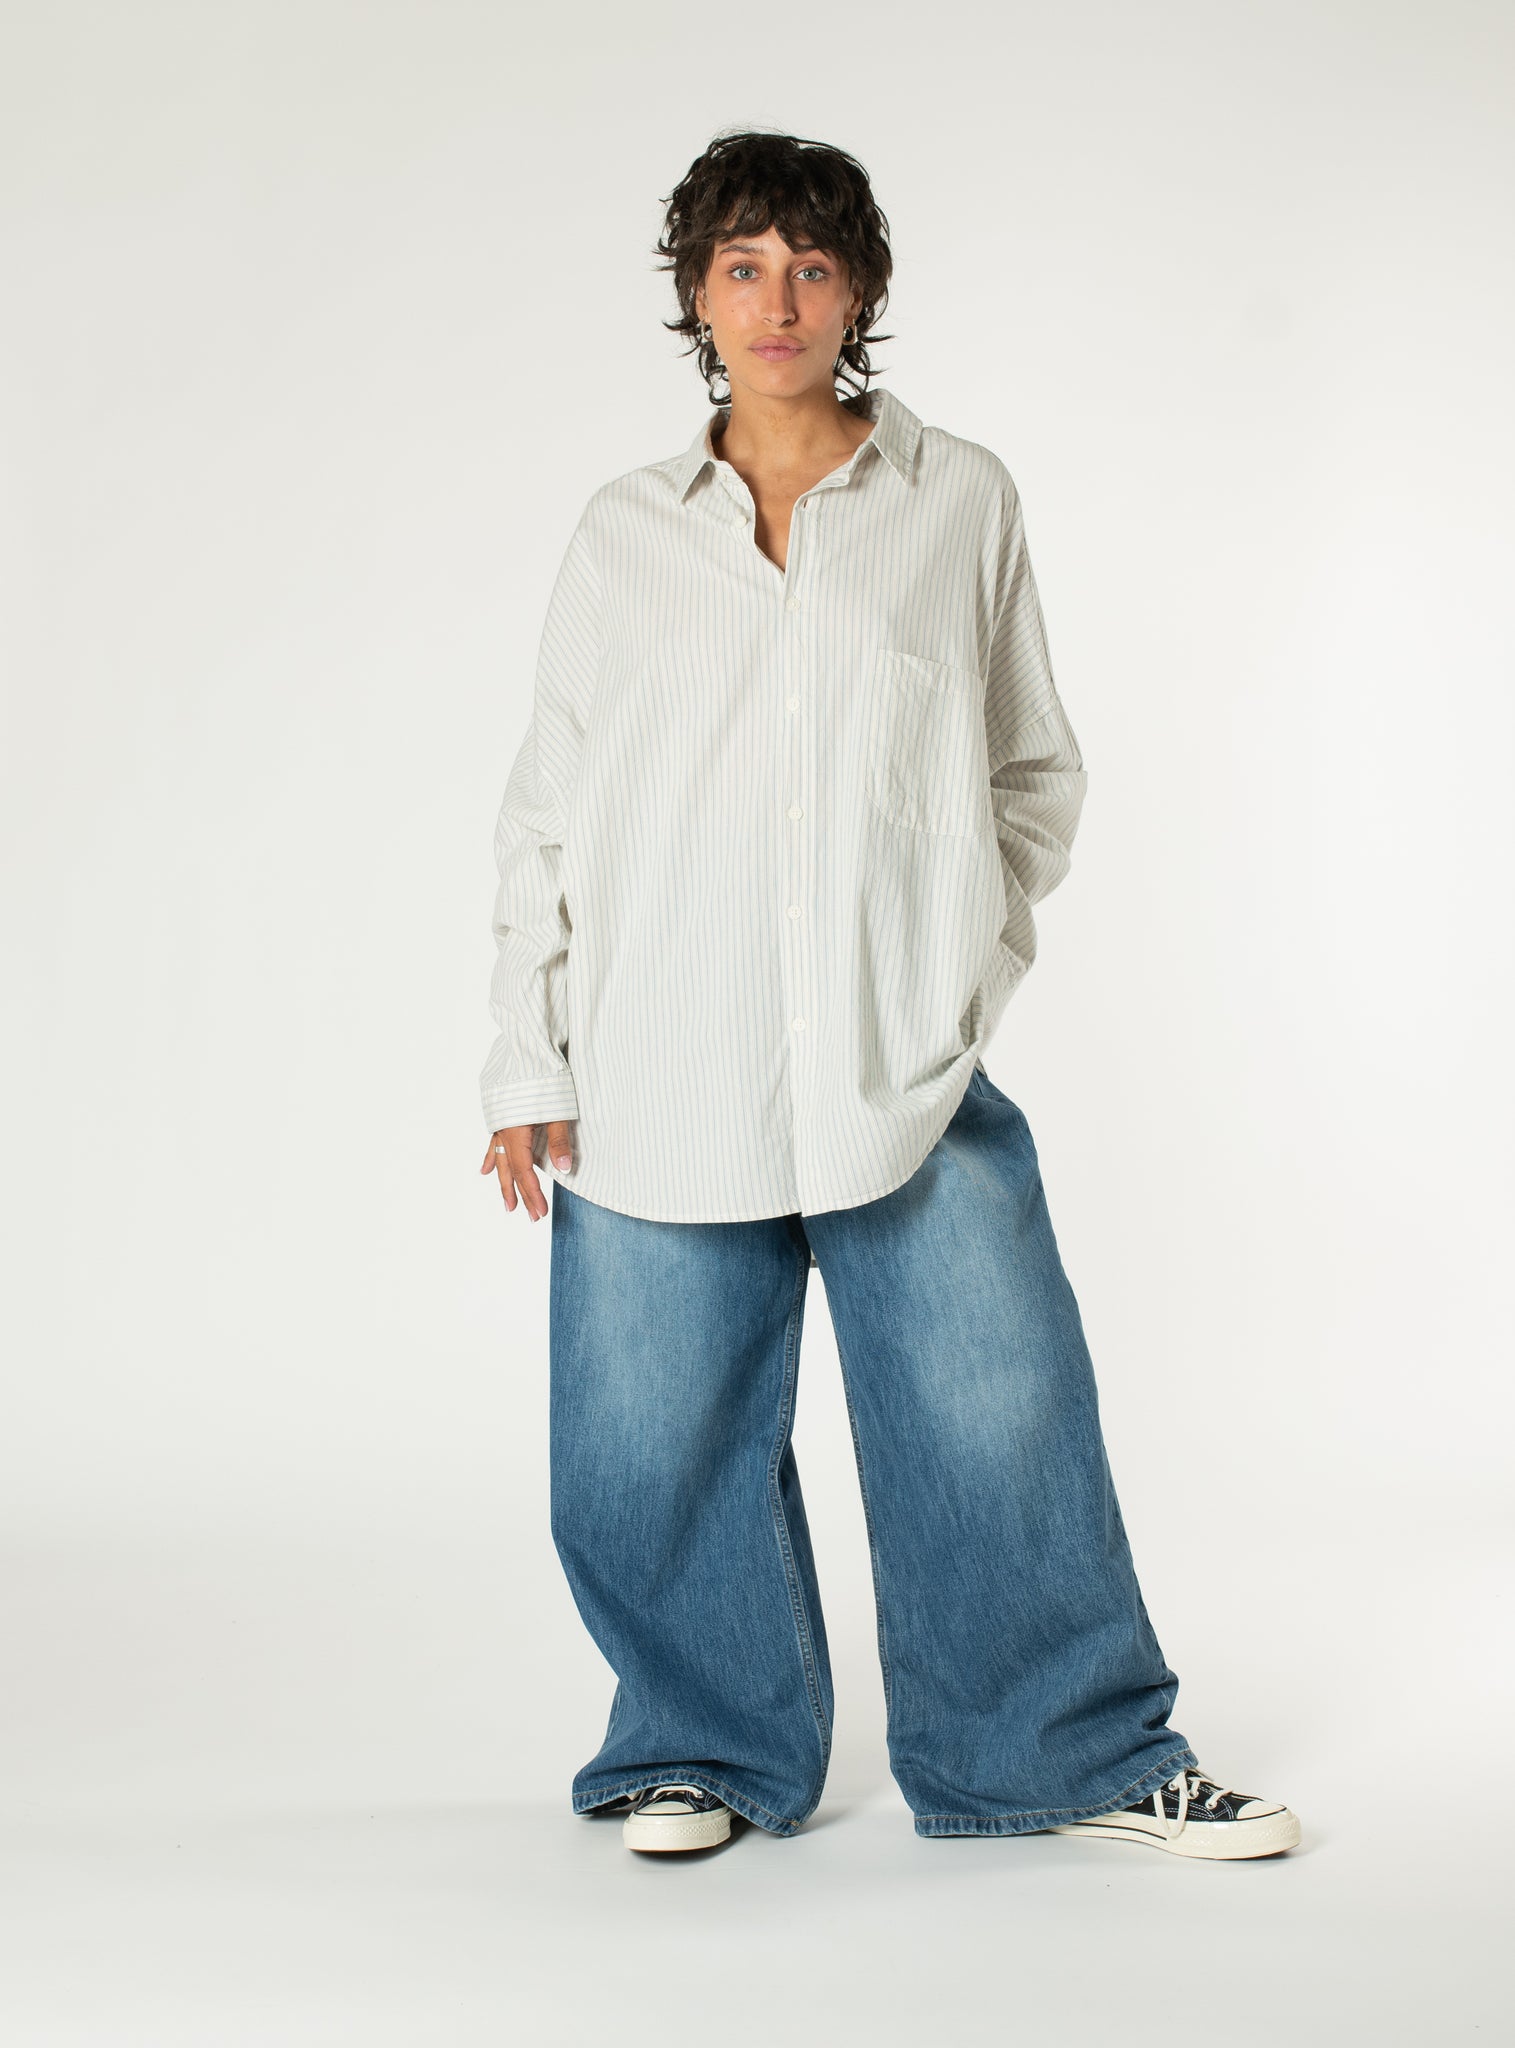 Wide-leg High Jeans